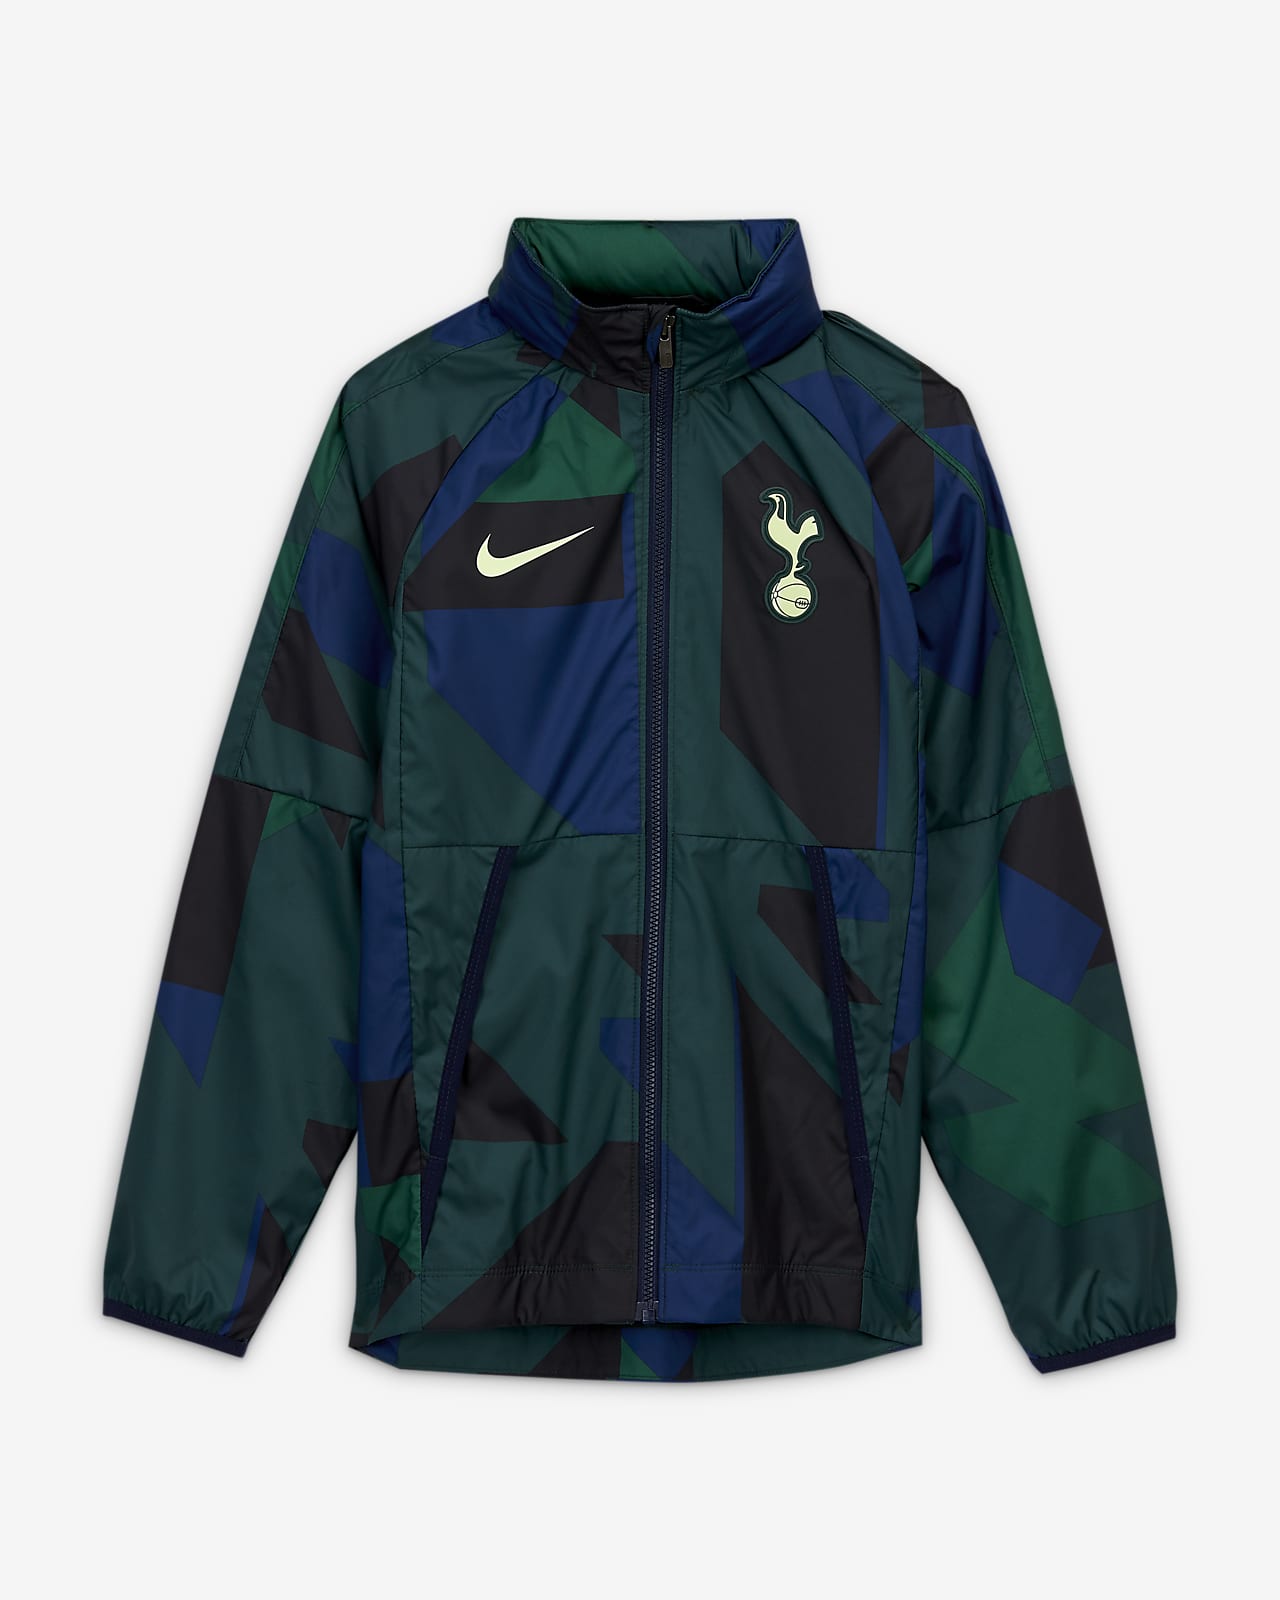 Giacca da calcio Tottenham Hotspur - Ragazzi. Nike IT